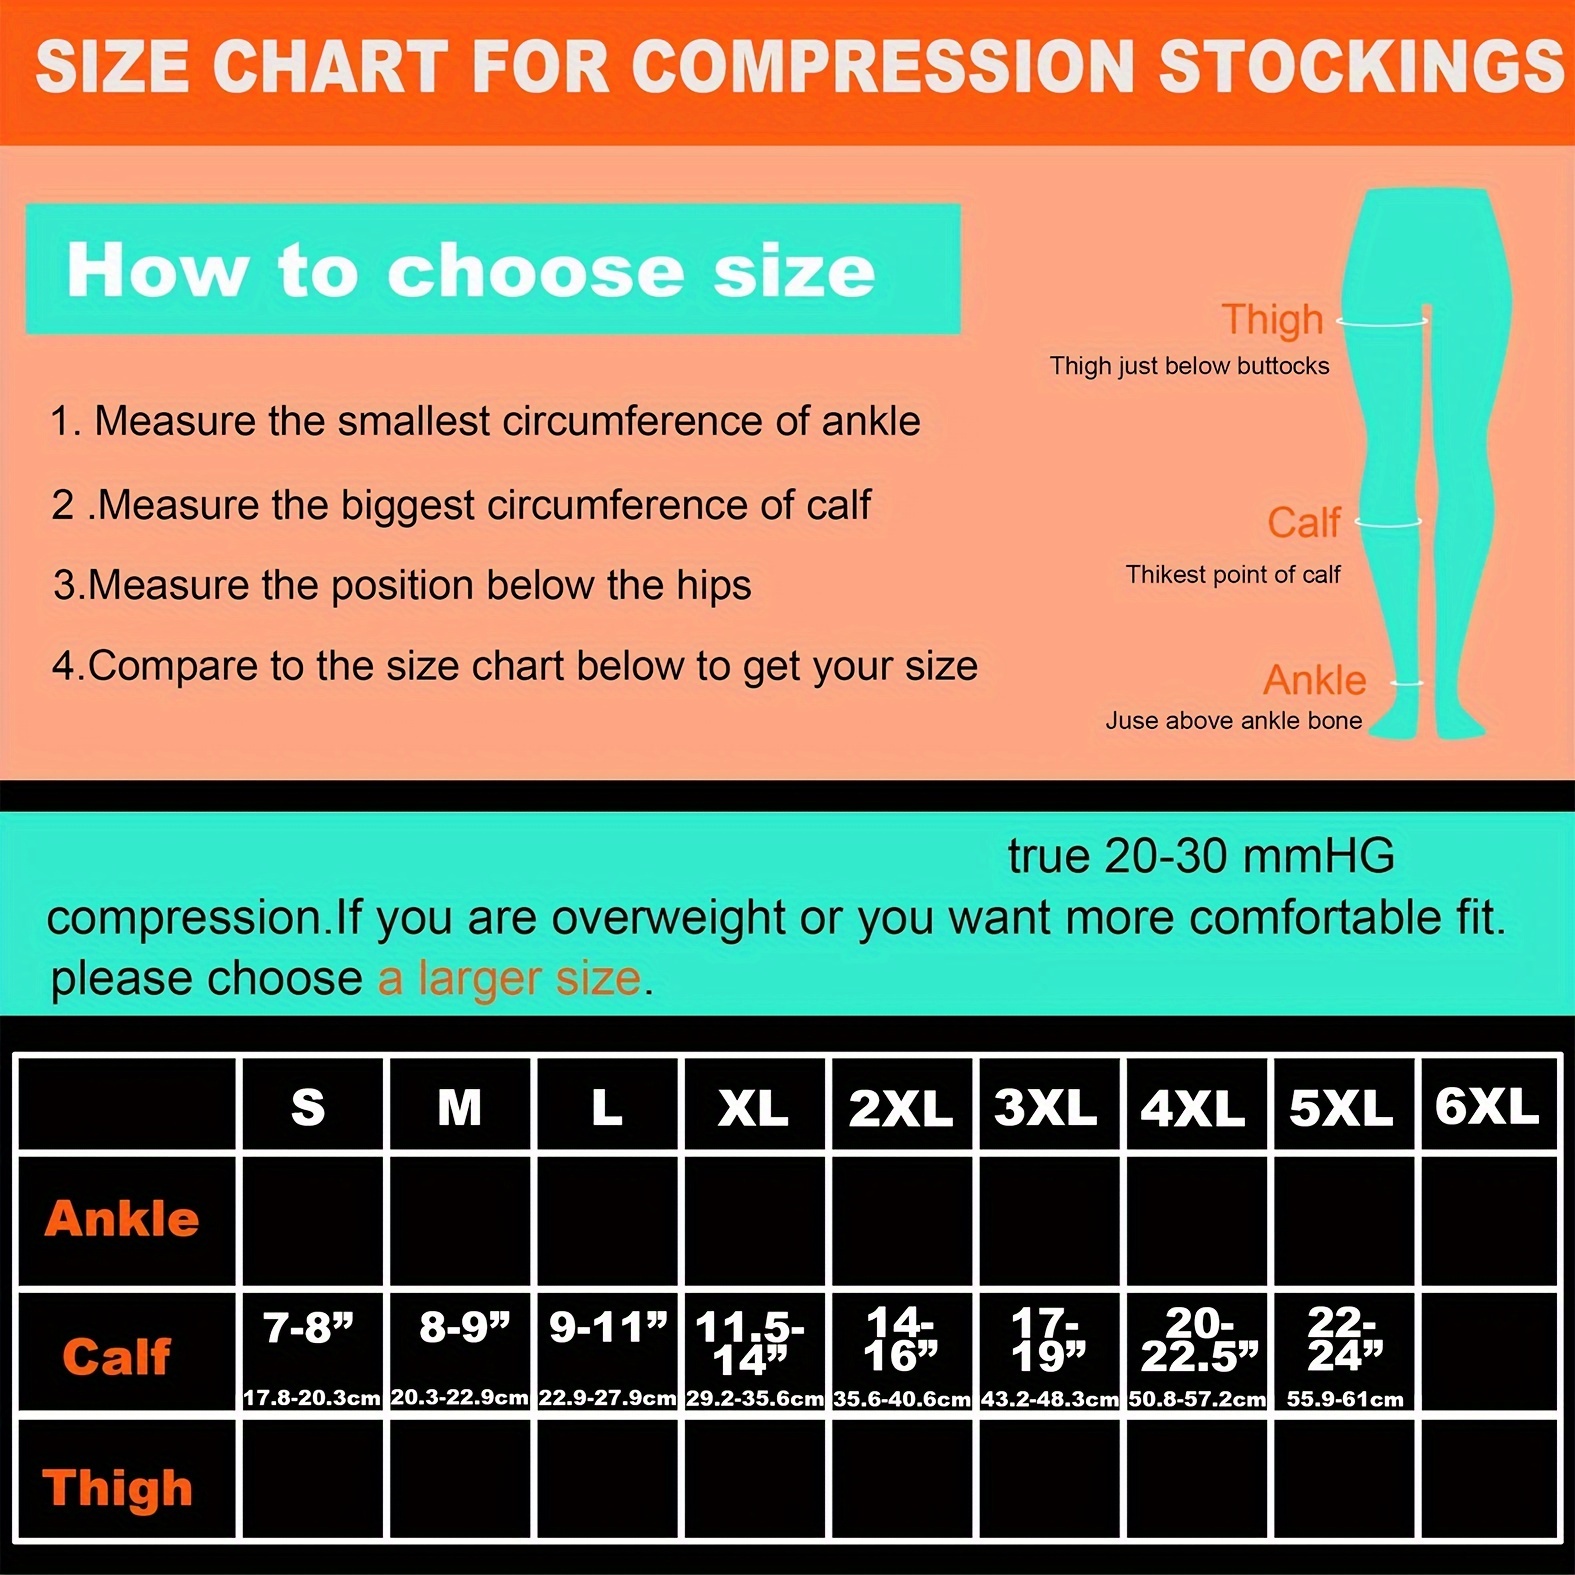 1Pair Calf Compression Sleeves Running Leg Football Pressure Socks  20-30mmHg Compression Socks For Shin Splint Pain Relief